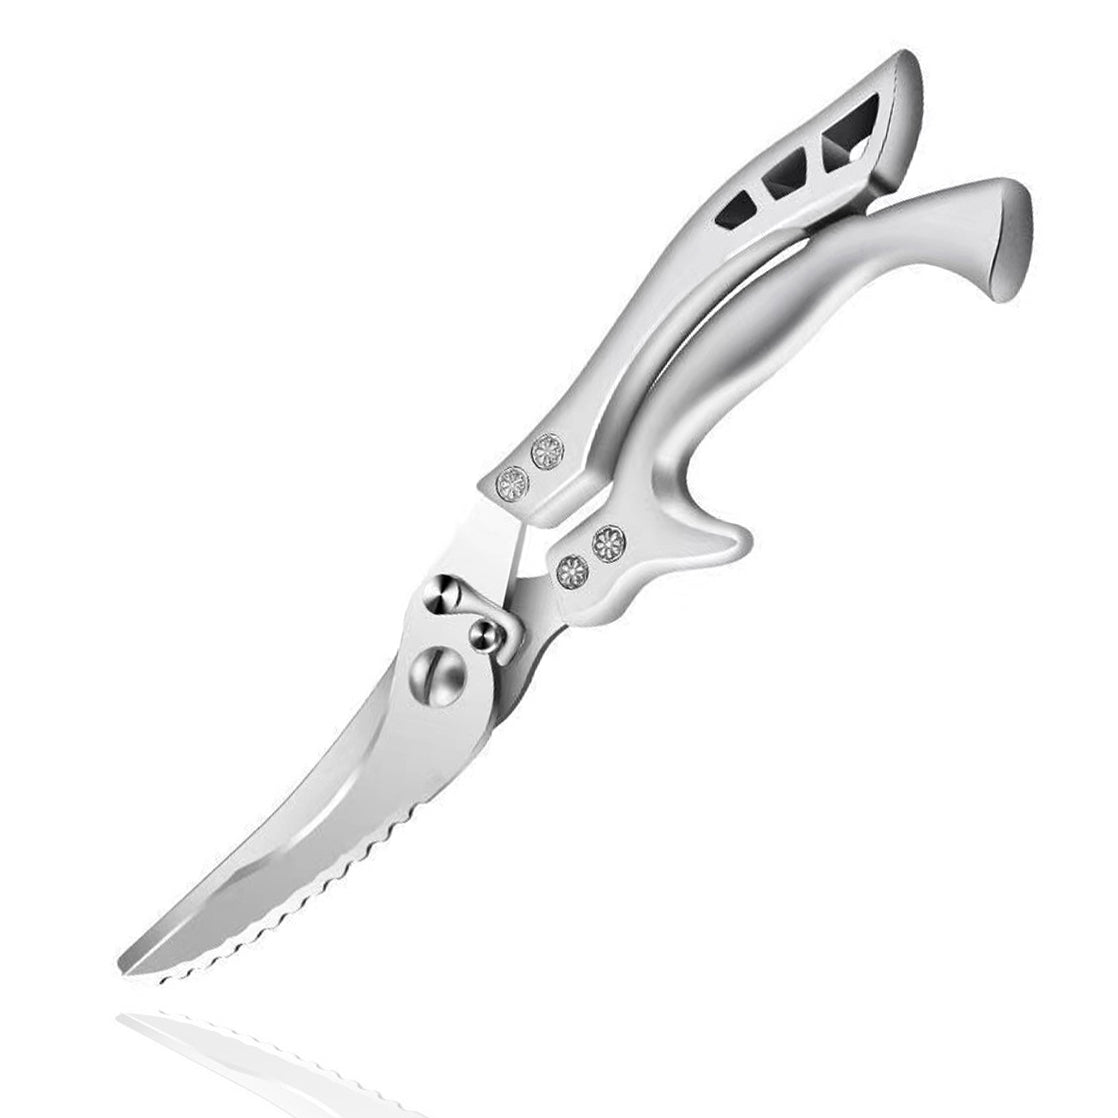 Multipurpose Stainless Steel Heavy Duty Kitchen Scissors - Letcase